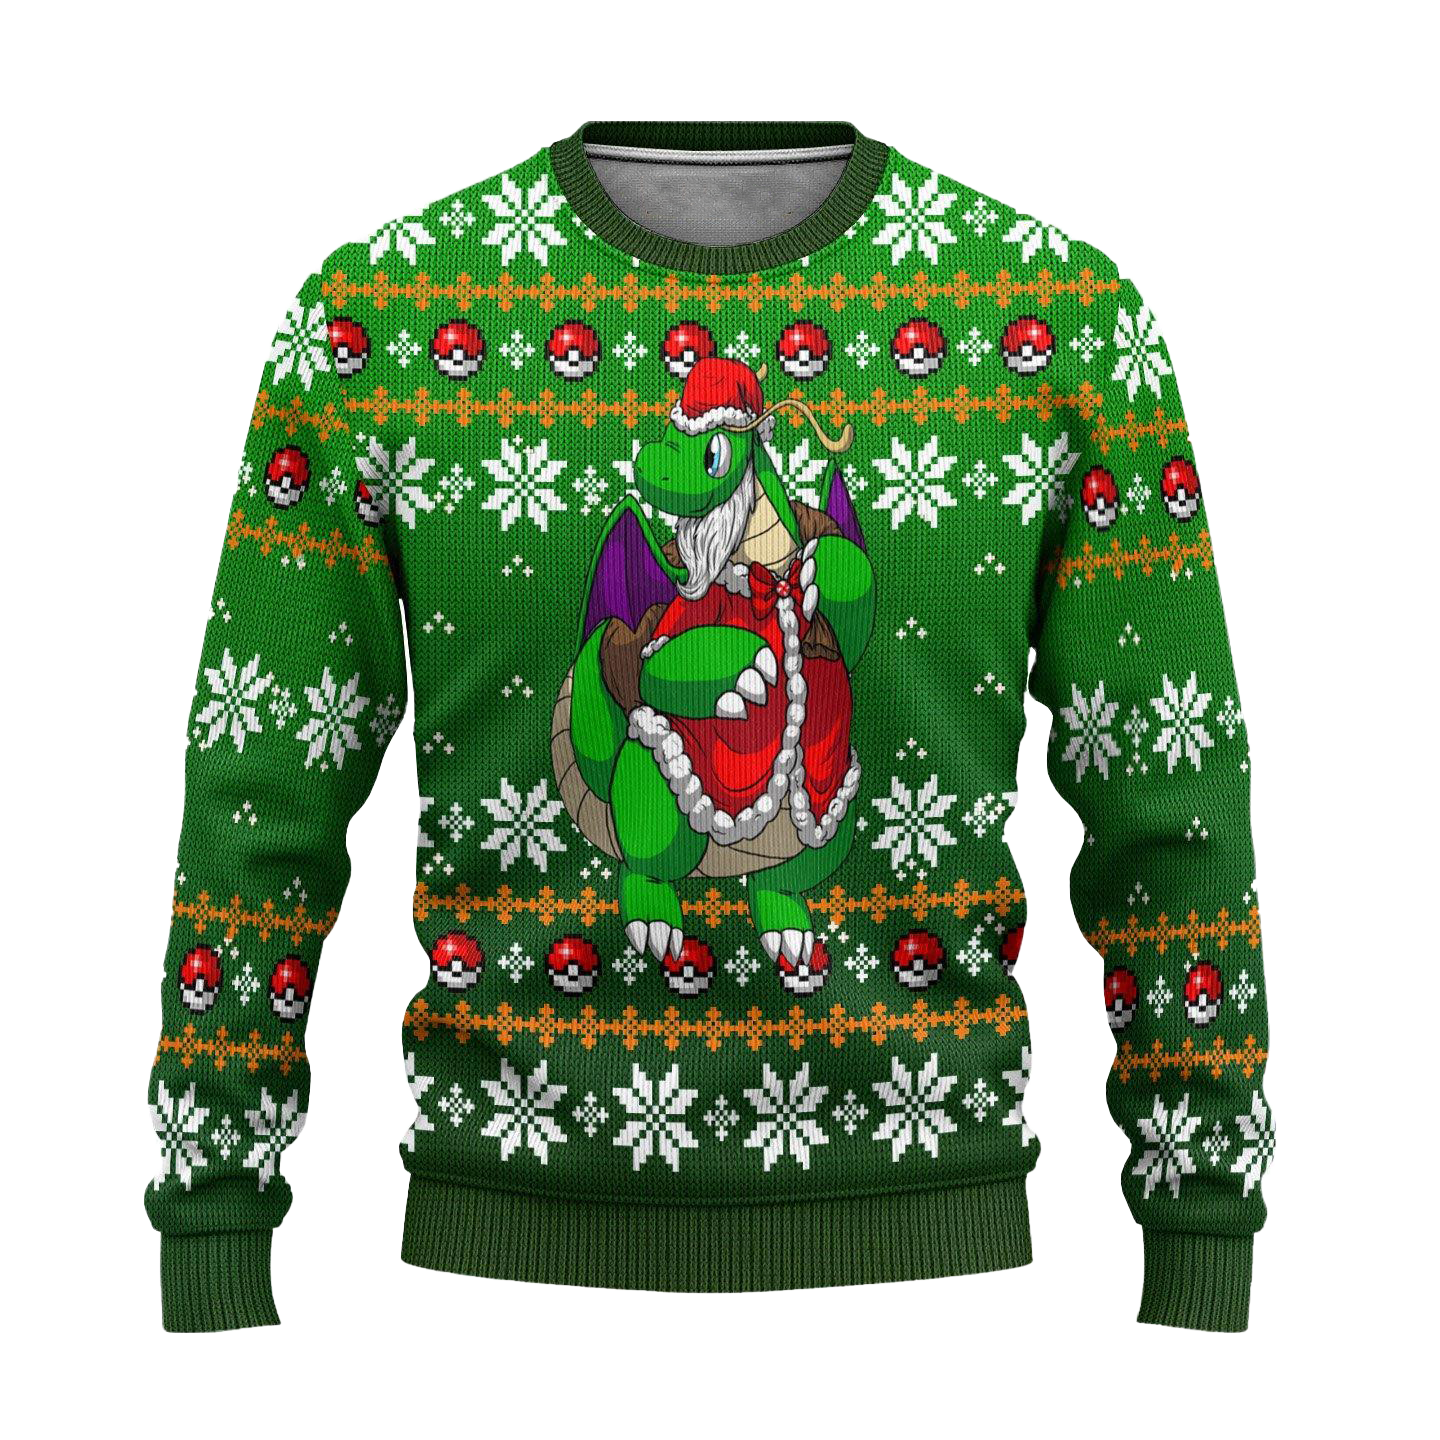 Pokemon Dragonite Ugly Anime Christmas Sweater Xmas Gift